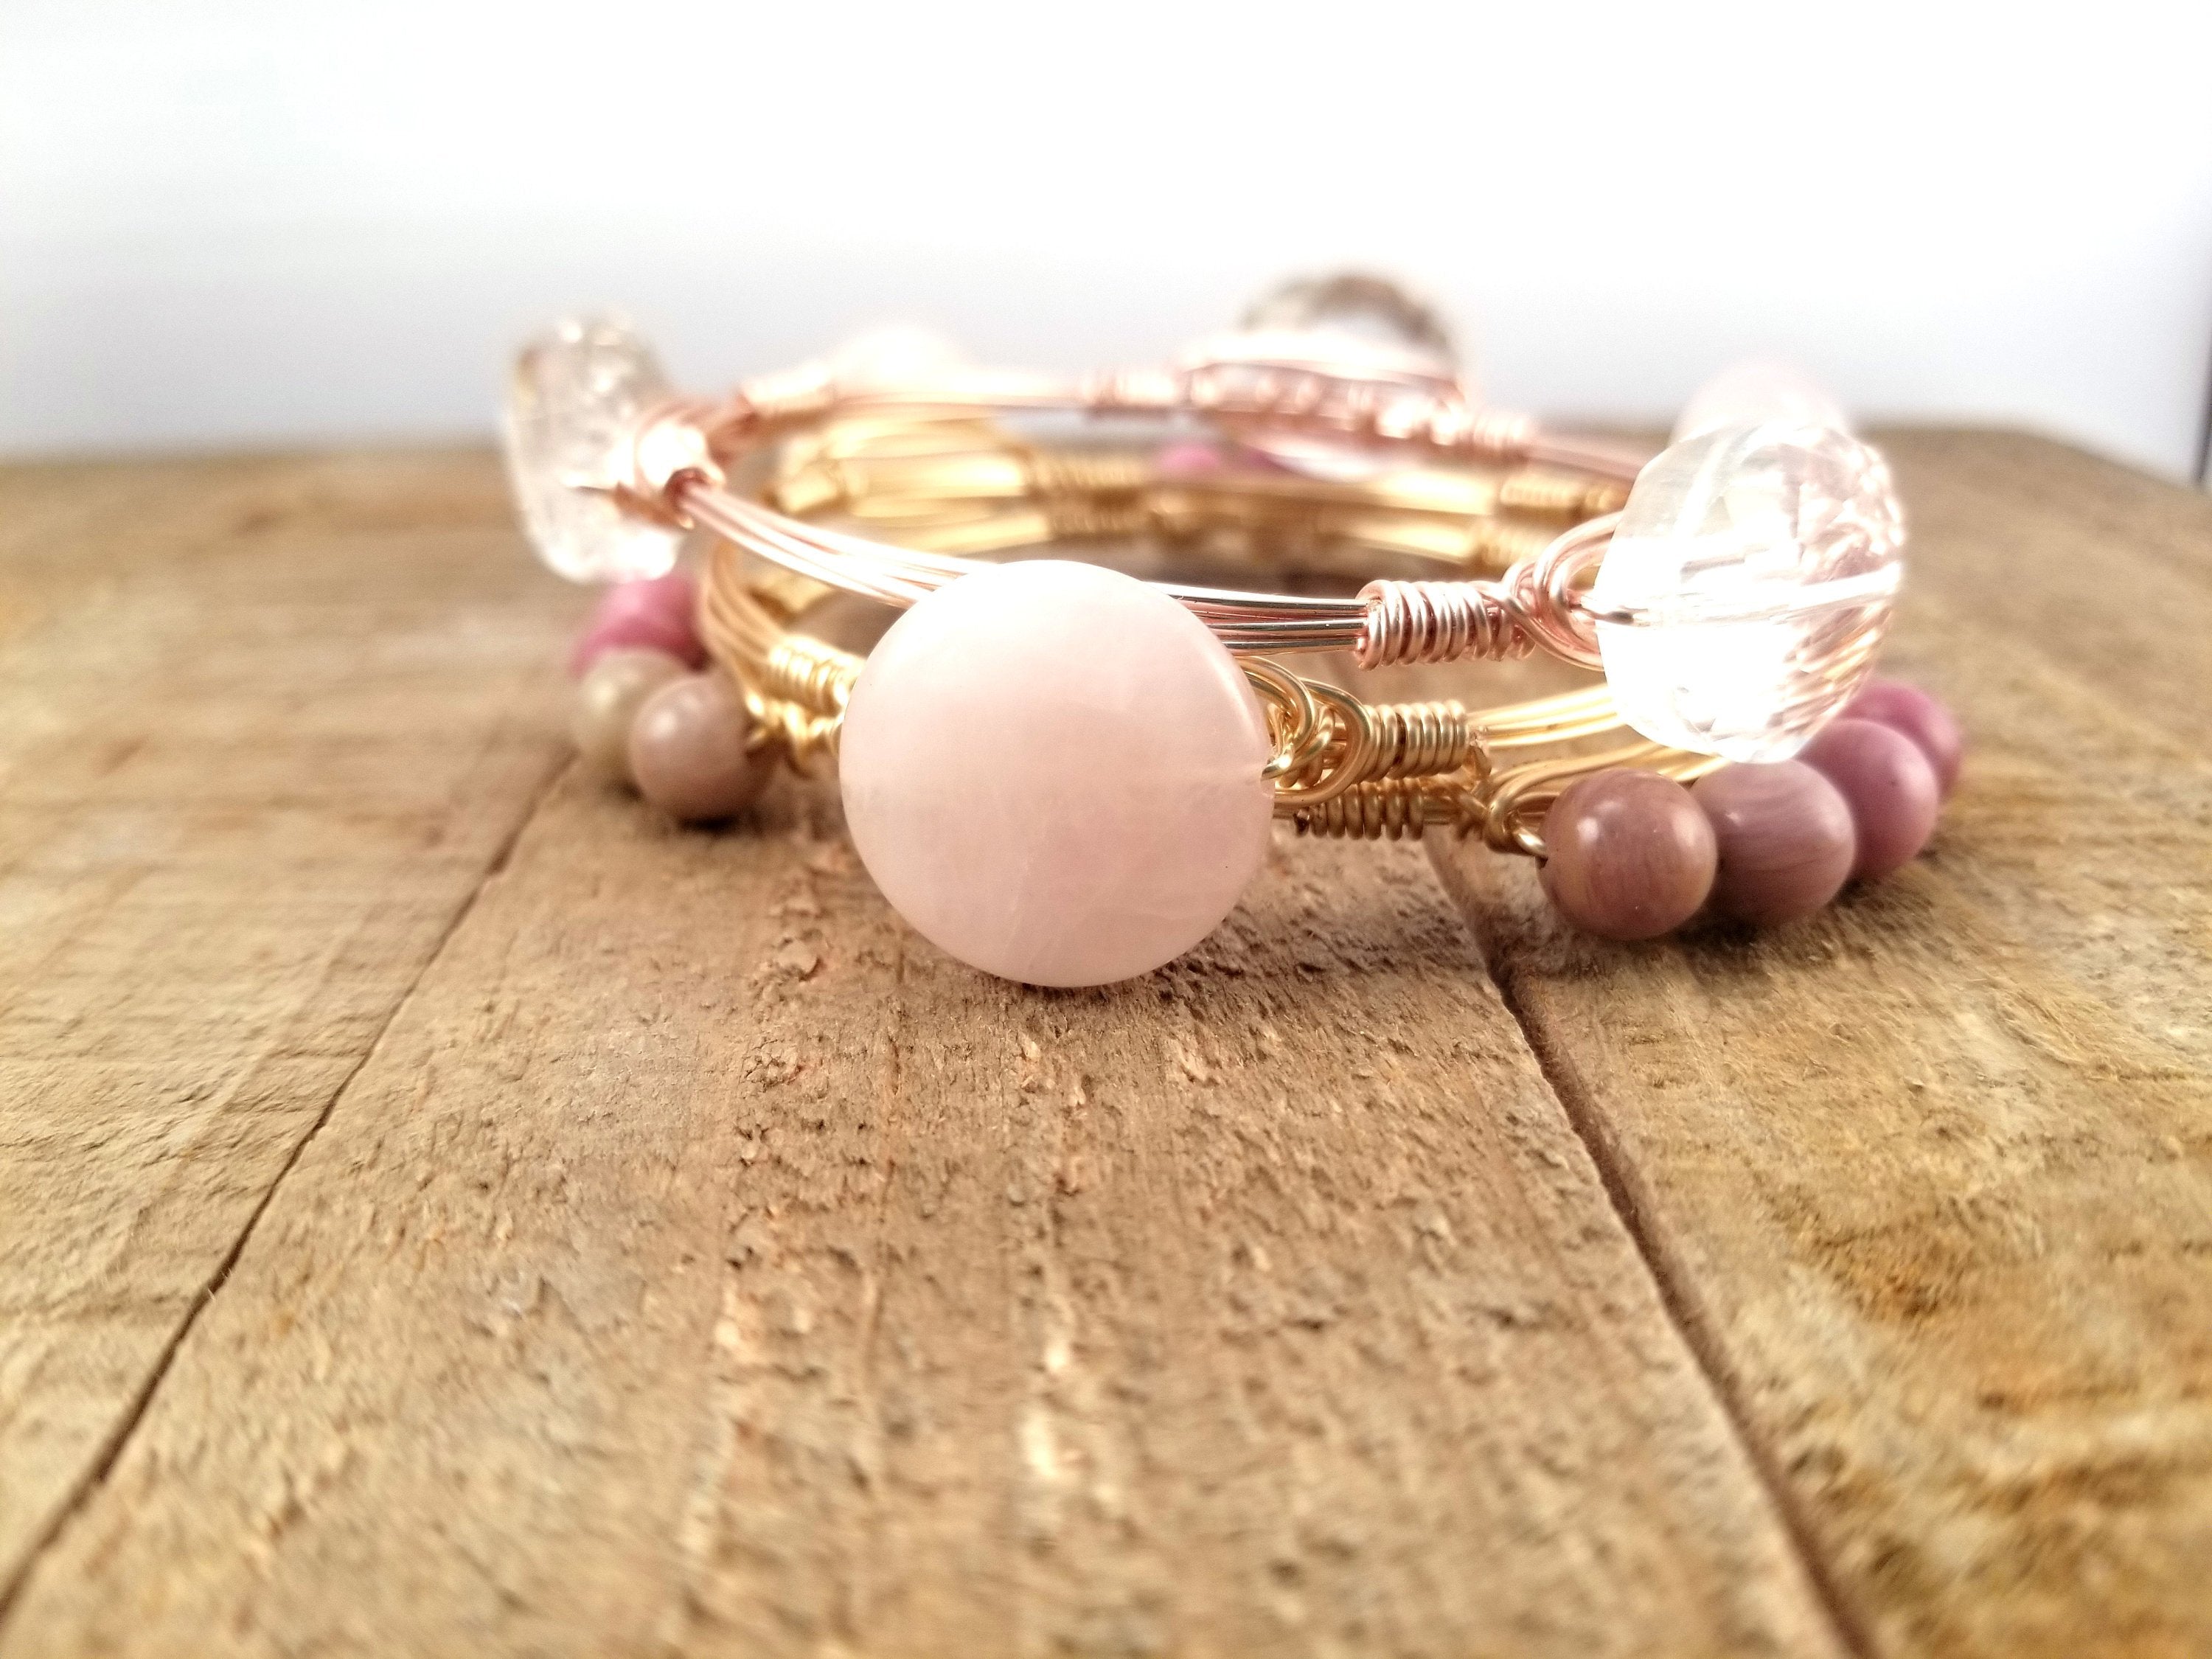 Pink quartz bangle, rhodonite cluster bangle and clear crystal bangle set of 3